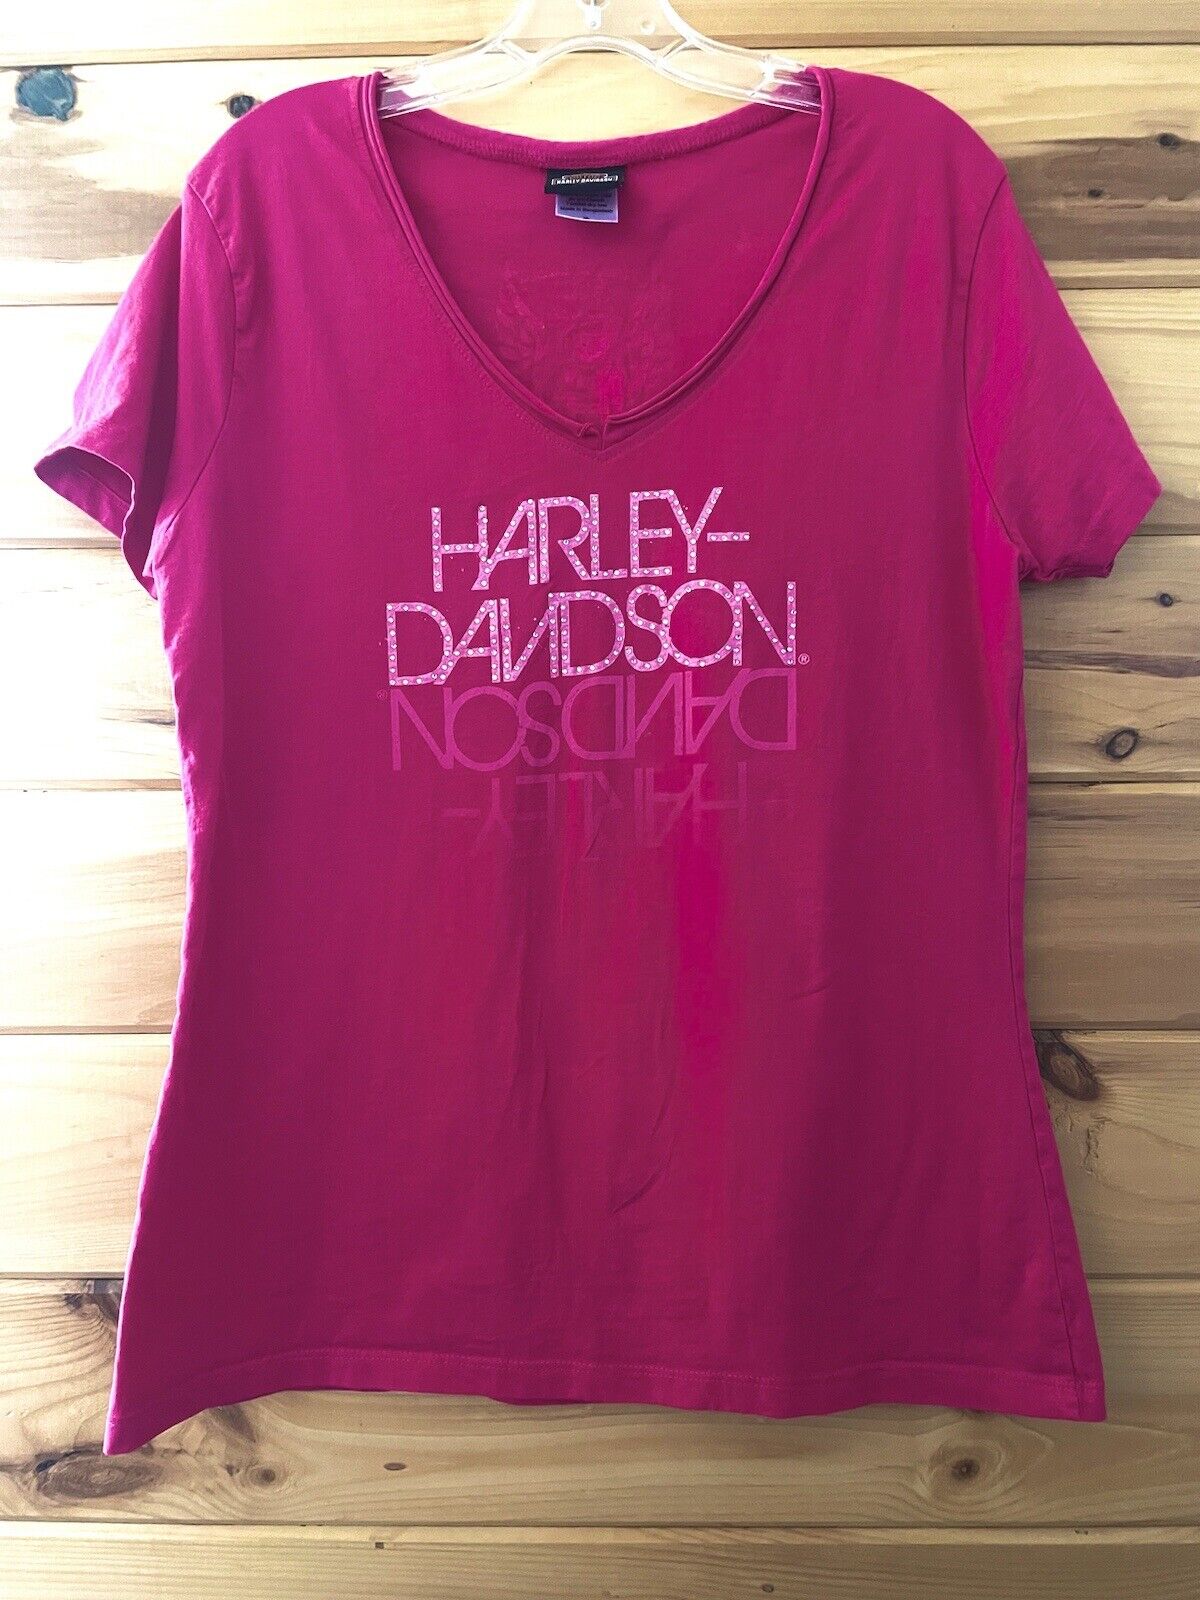 Harley Davidson Women’s Pink T Shirt. Officially Licensed Wear.